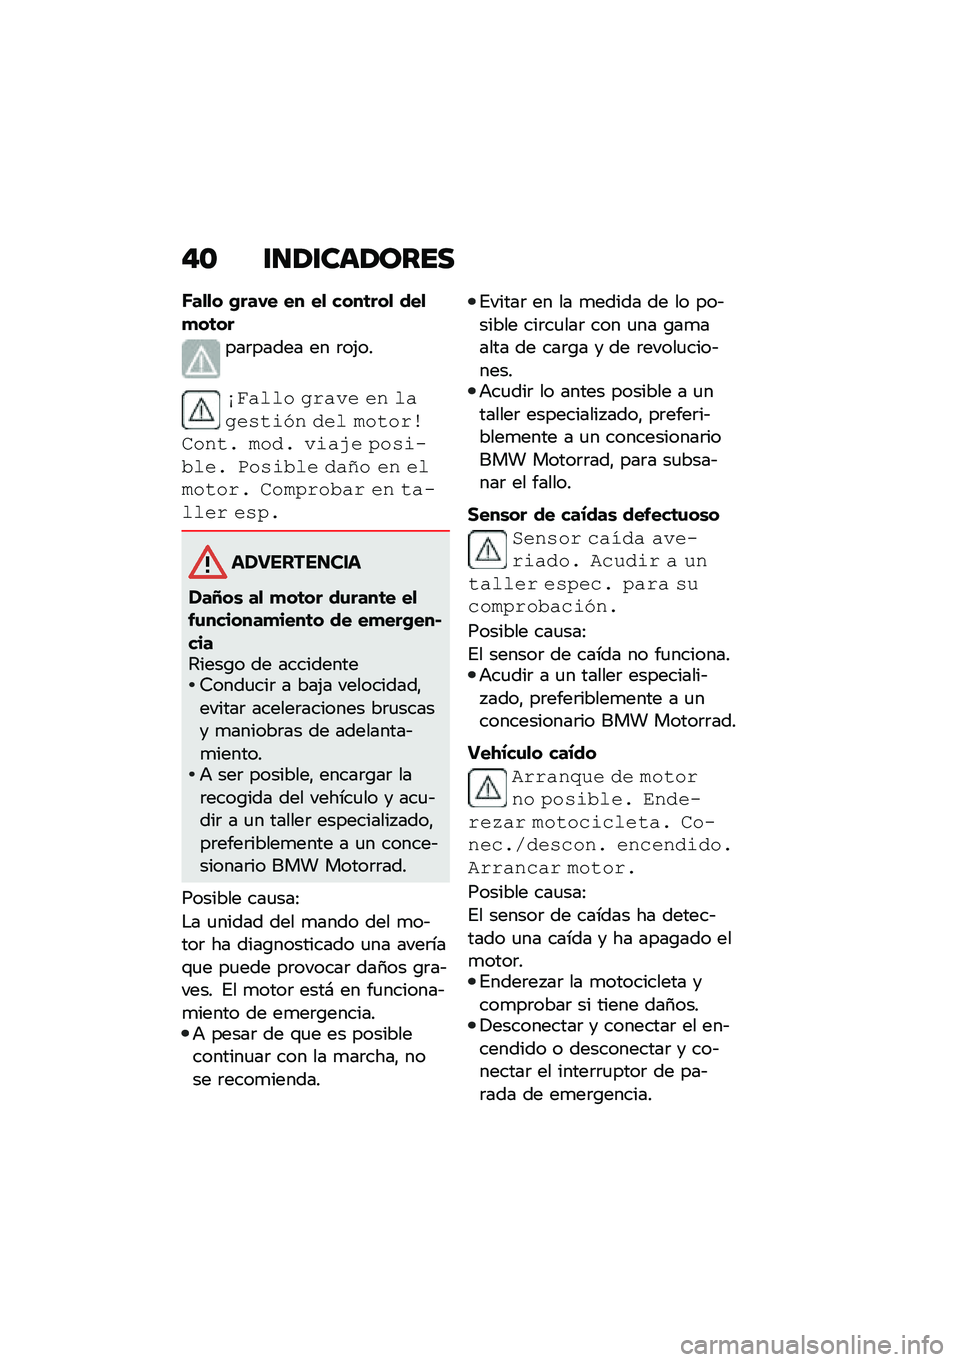 BMW MOTORRAD M 1000 RR 2021  Manual de instrucciones (in Spanish) �"�\b �\f�
�1�\f���1����
�I��
�
� �*���,� �� ��
 ����	���
 ���
�
��	��
���	����� �� �	��(��
�!�,���� �
���� �� ���
����\f�� ��� ������\b��